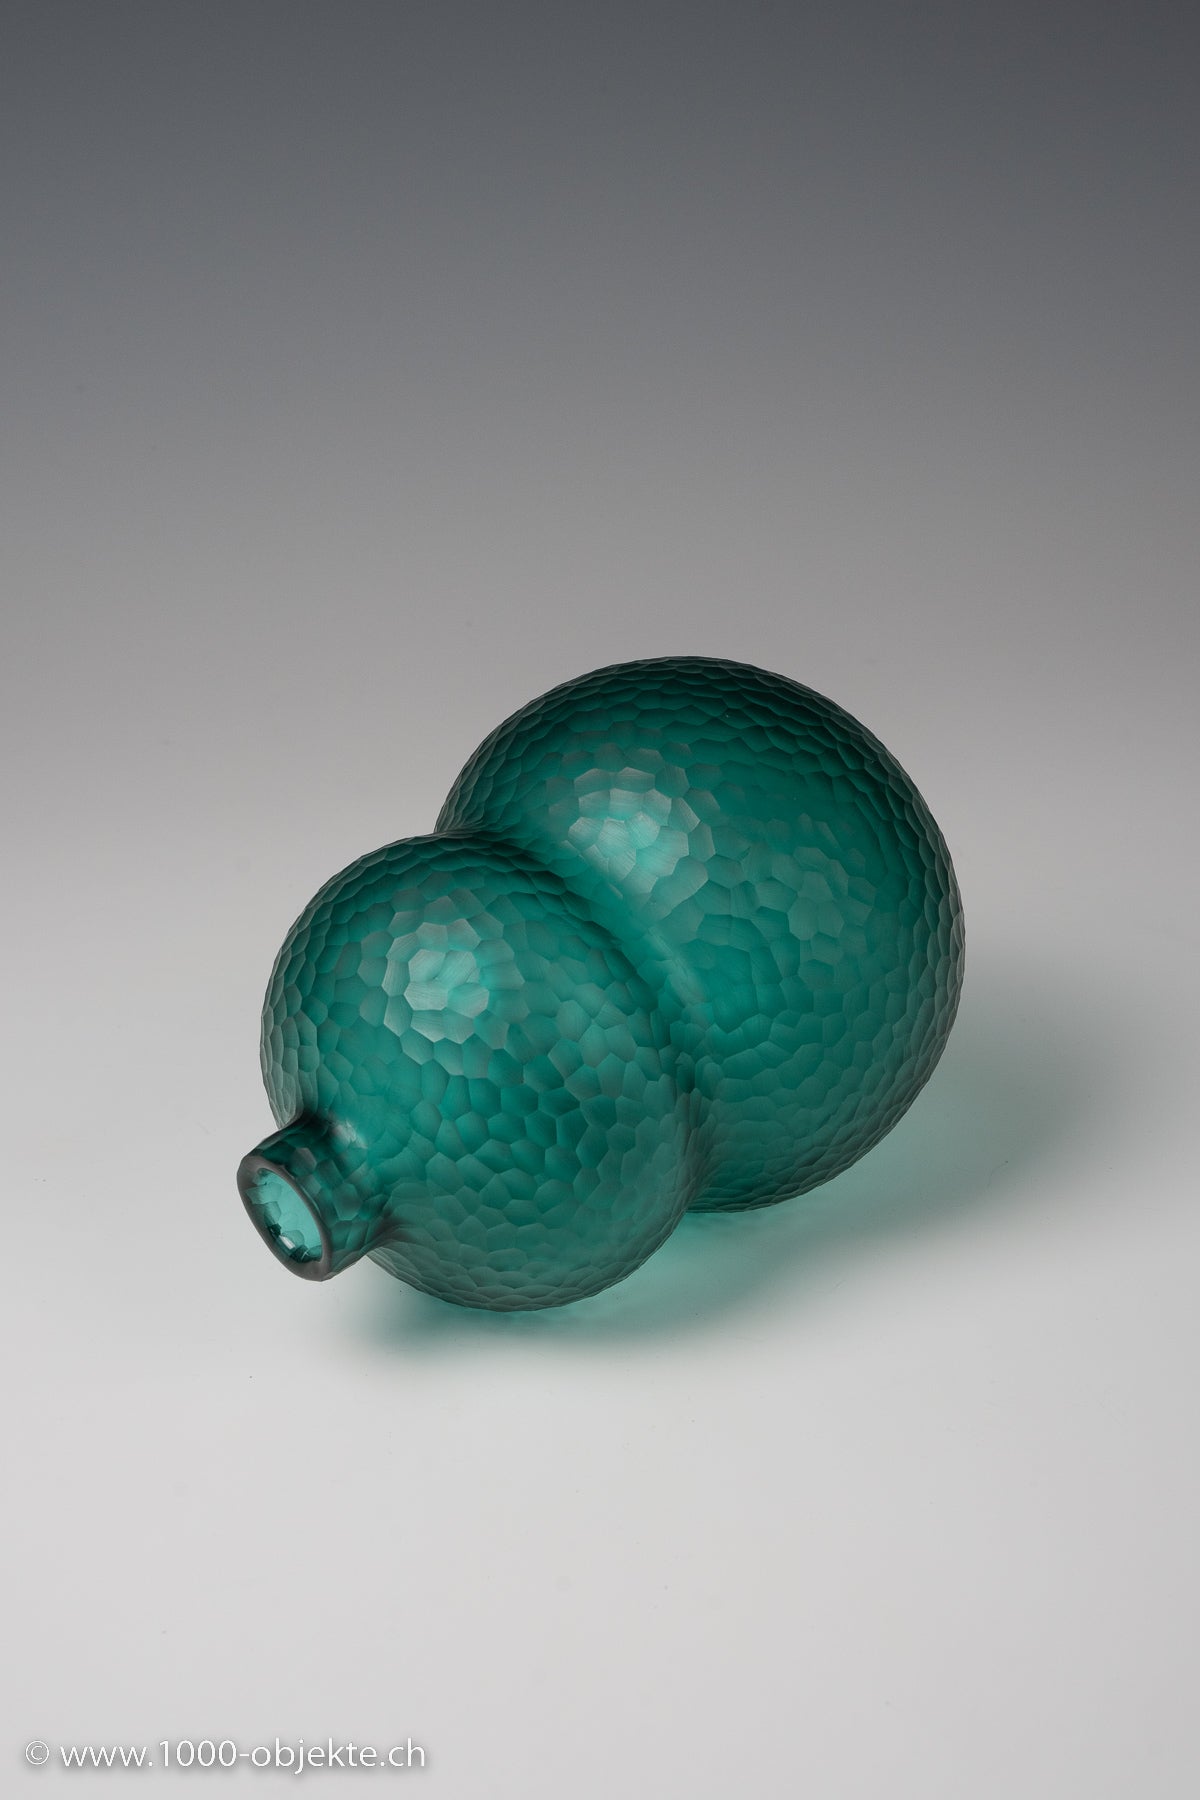 Carlo Scarpa (Italy, 1906-1978), "Battuto" vase, mouth blown glas